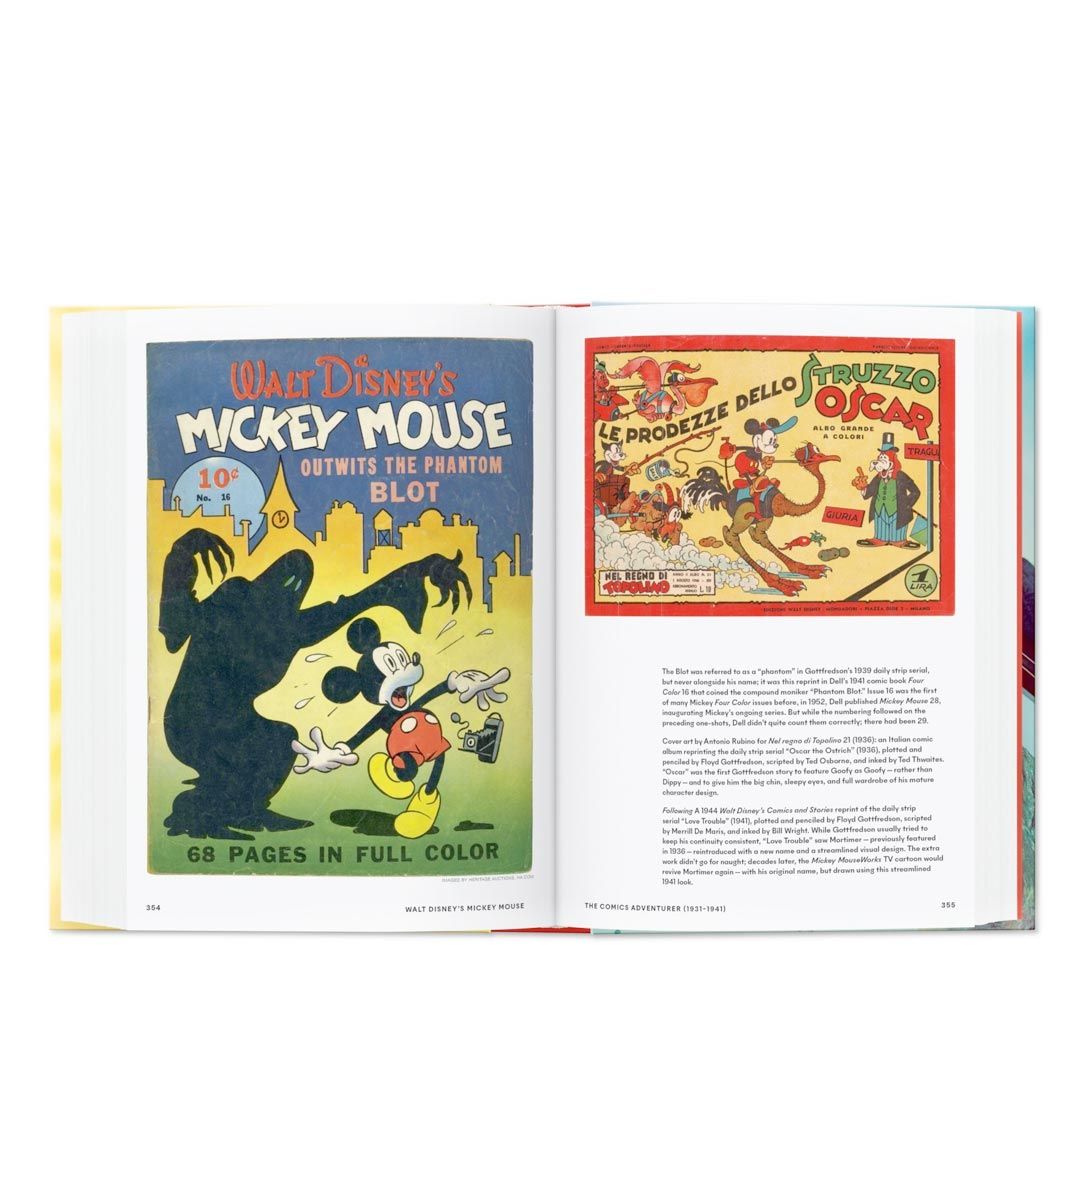 Walt Disney's Mickey Mouse 40th Anniversary Edition